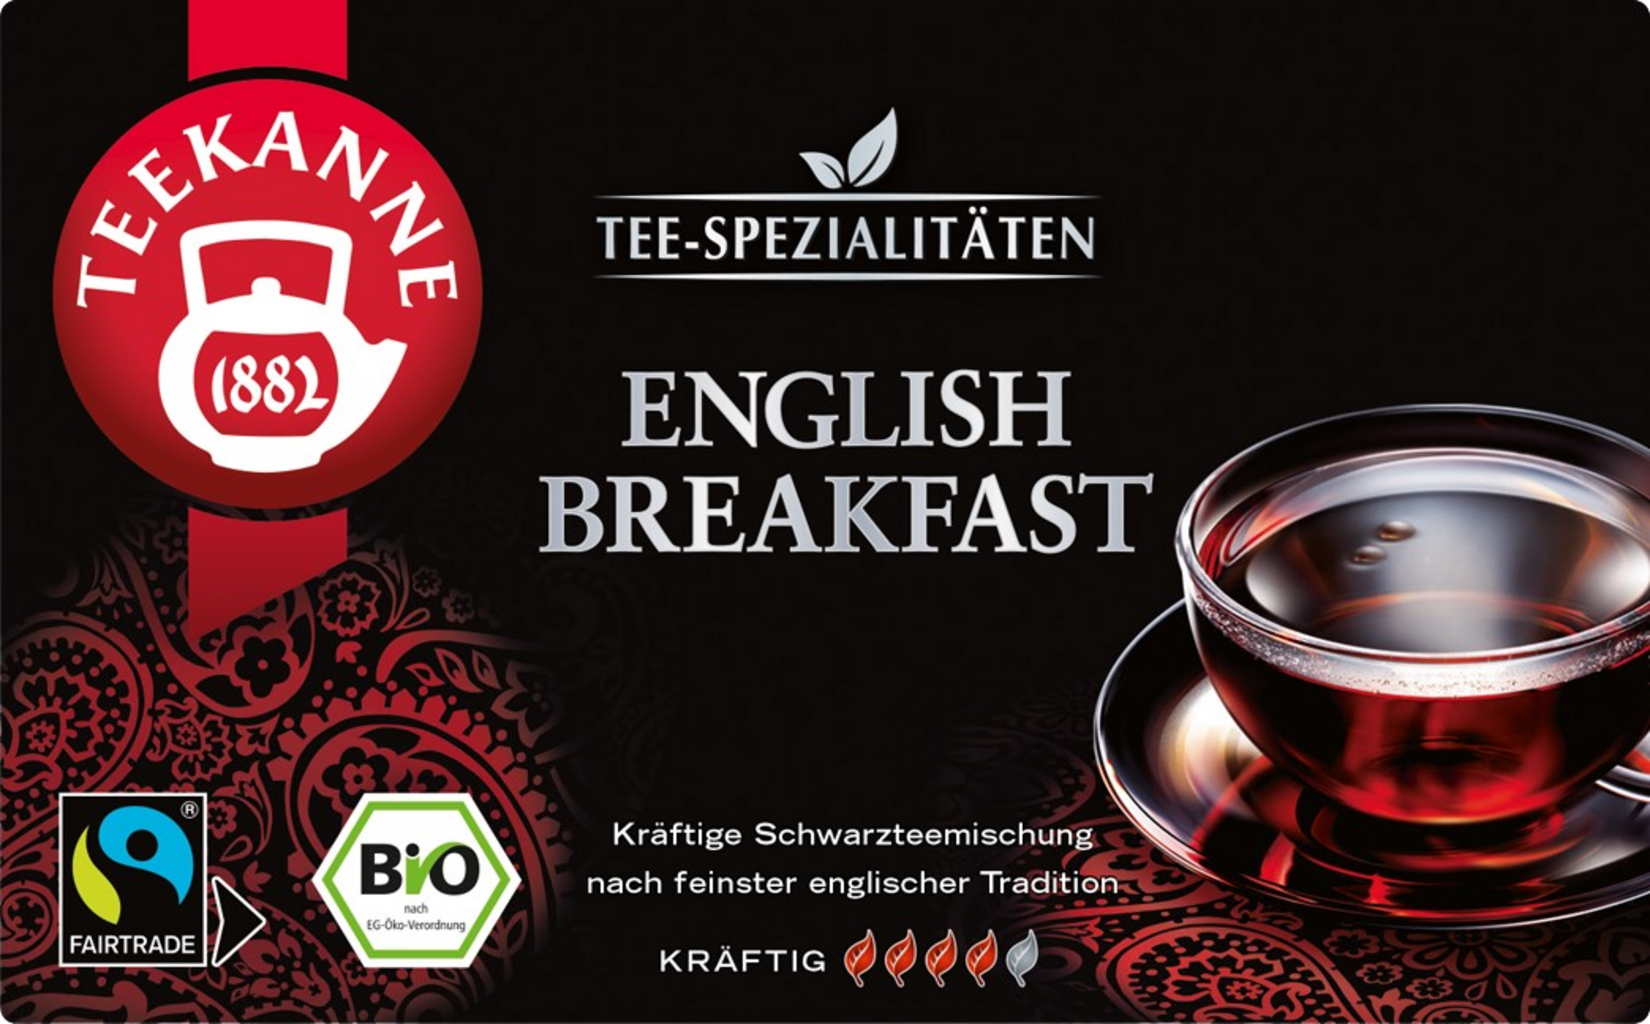 https://pi.nice-cdn.com/upload/image/product/large/default/teekanne-english-breakfast-specialty-tea-organic-fairtrade-rfa-35-g-1187869-en.png